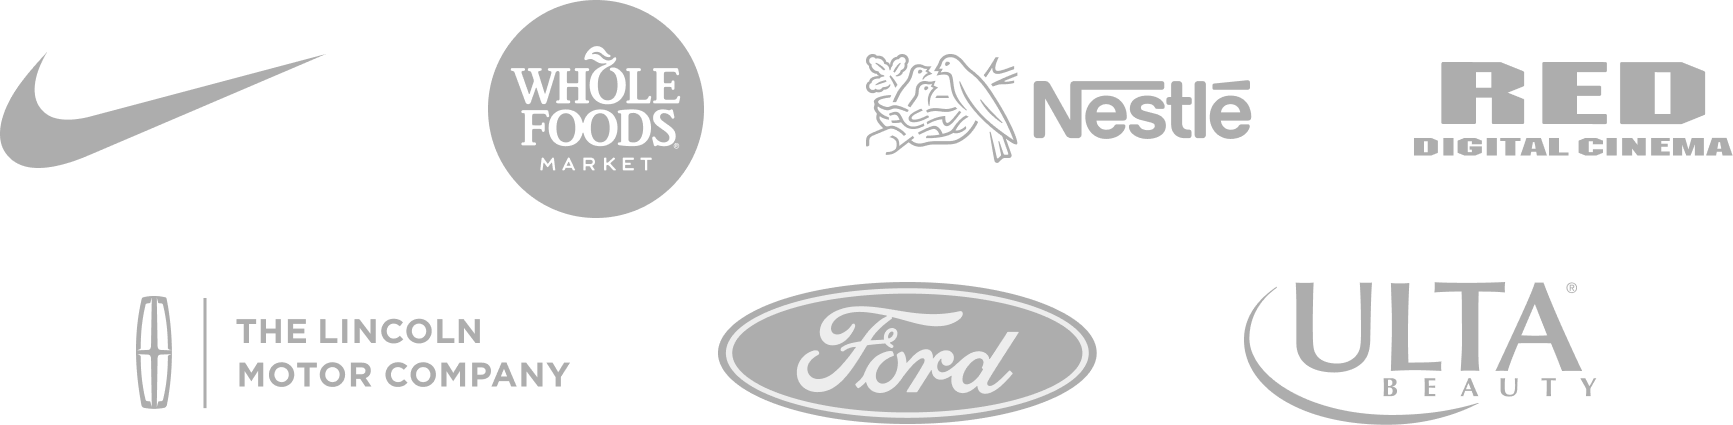 Logos of brands